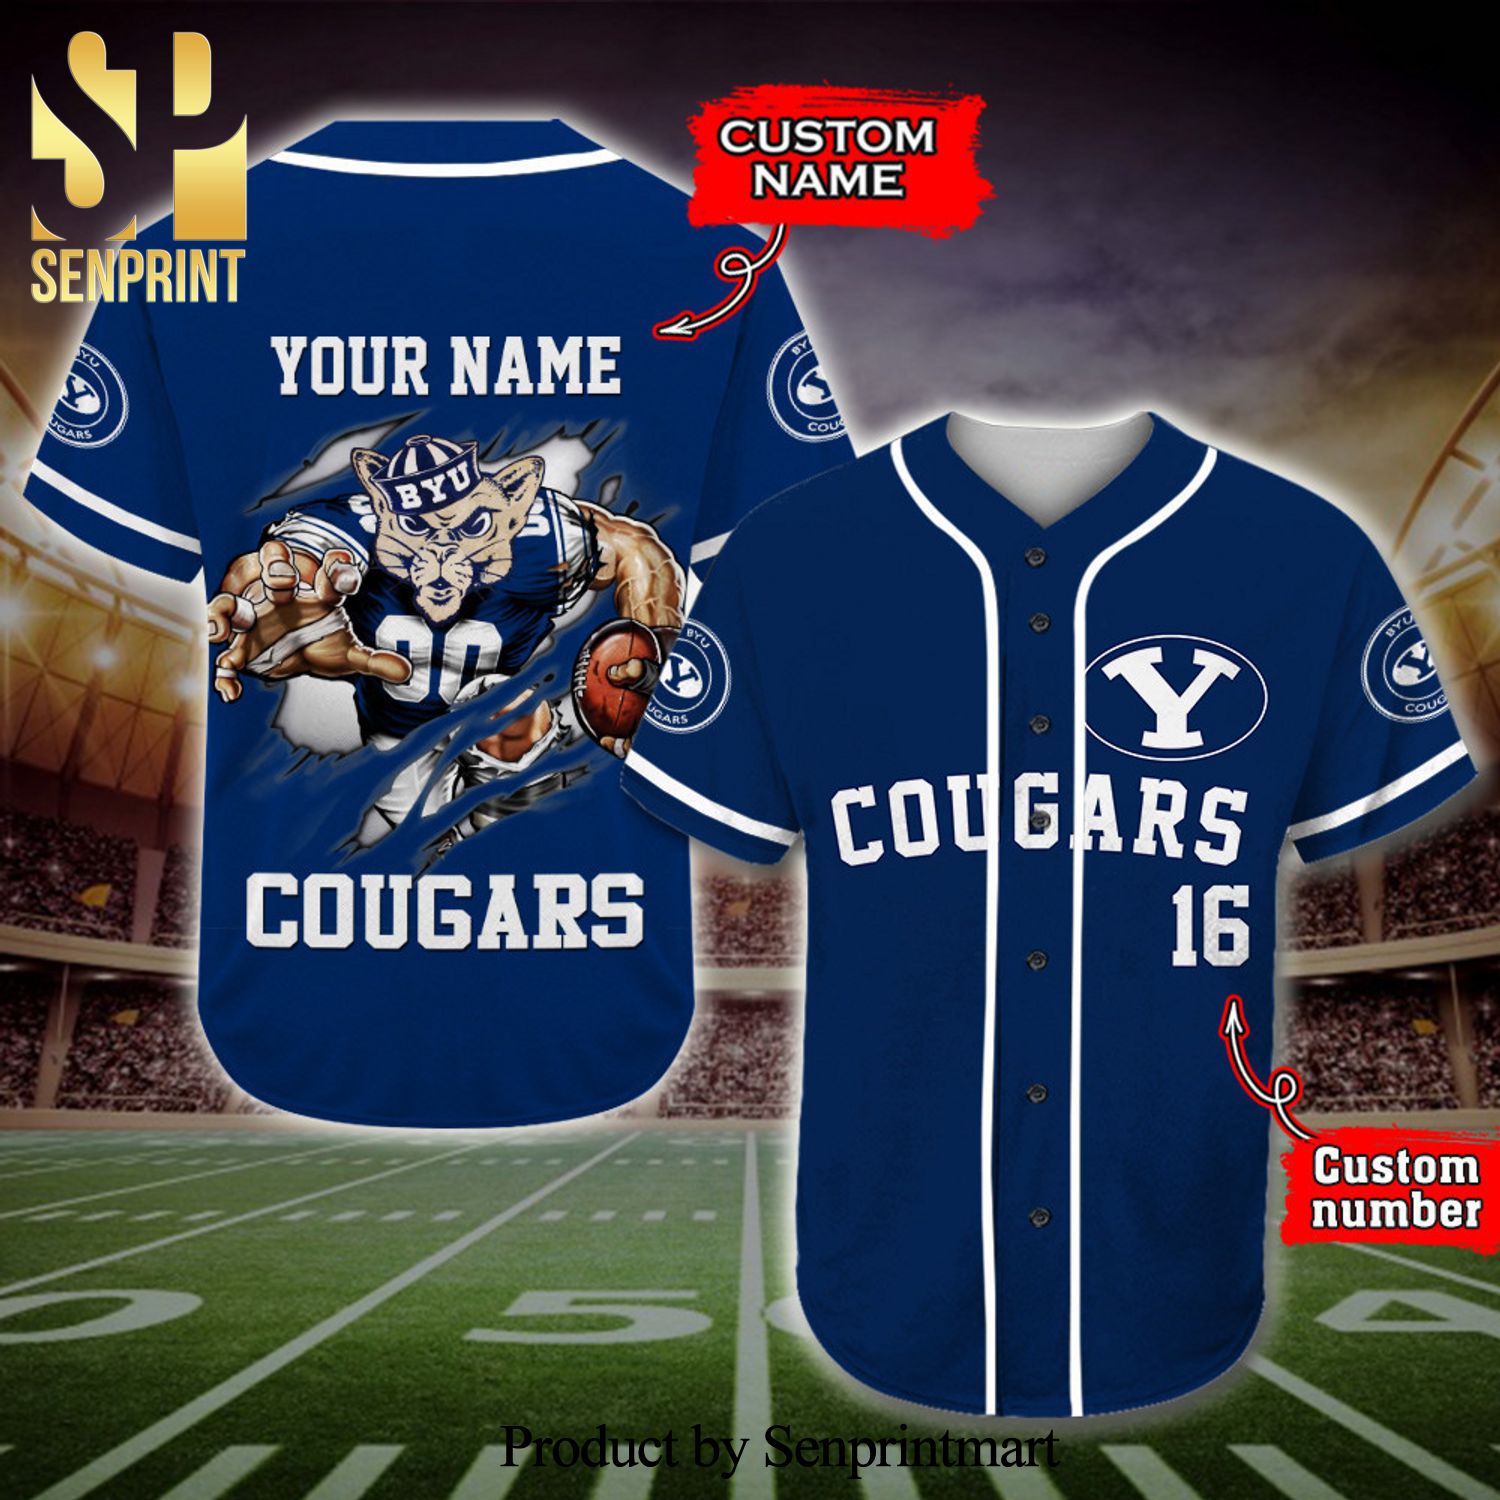 Personalized Byu Cougars Mascot Full Printing Baseball Jersey – Navy